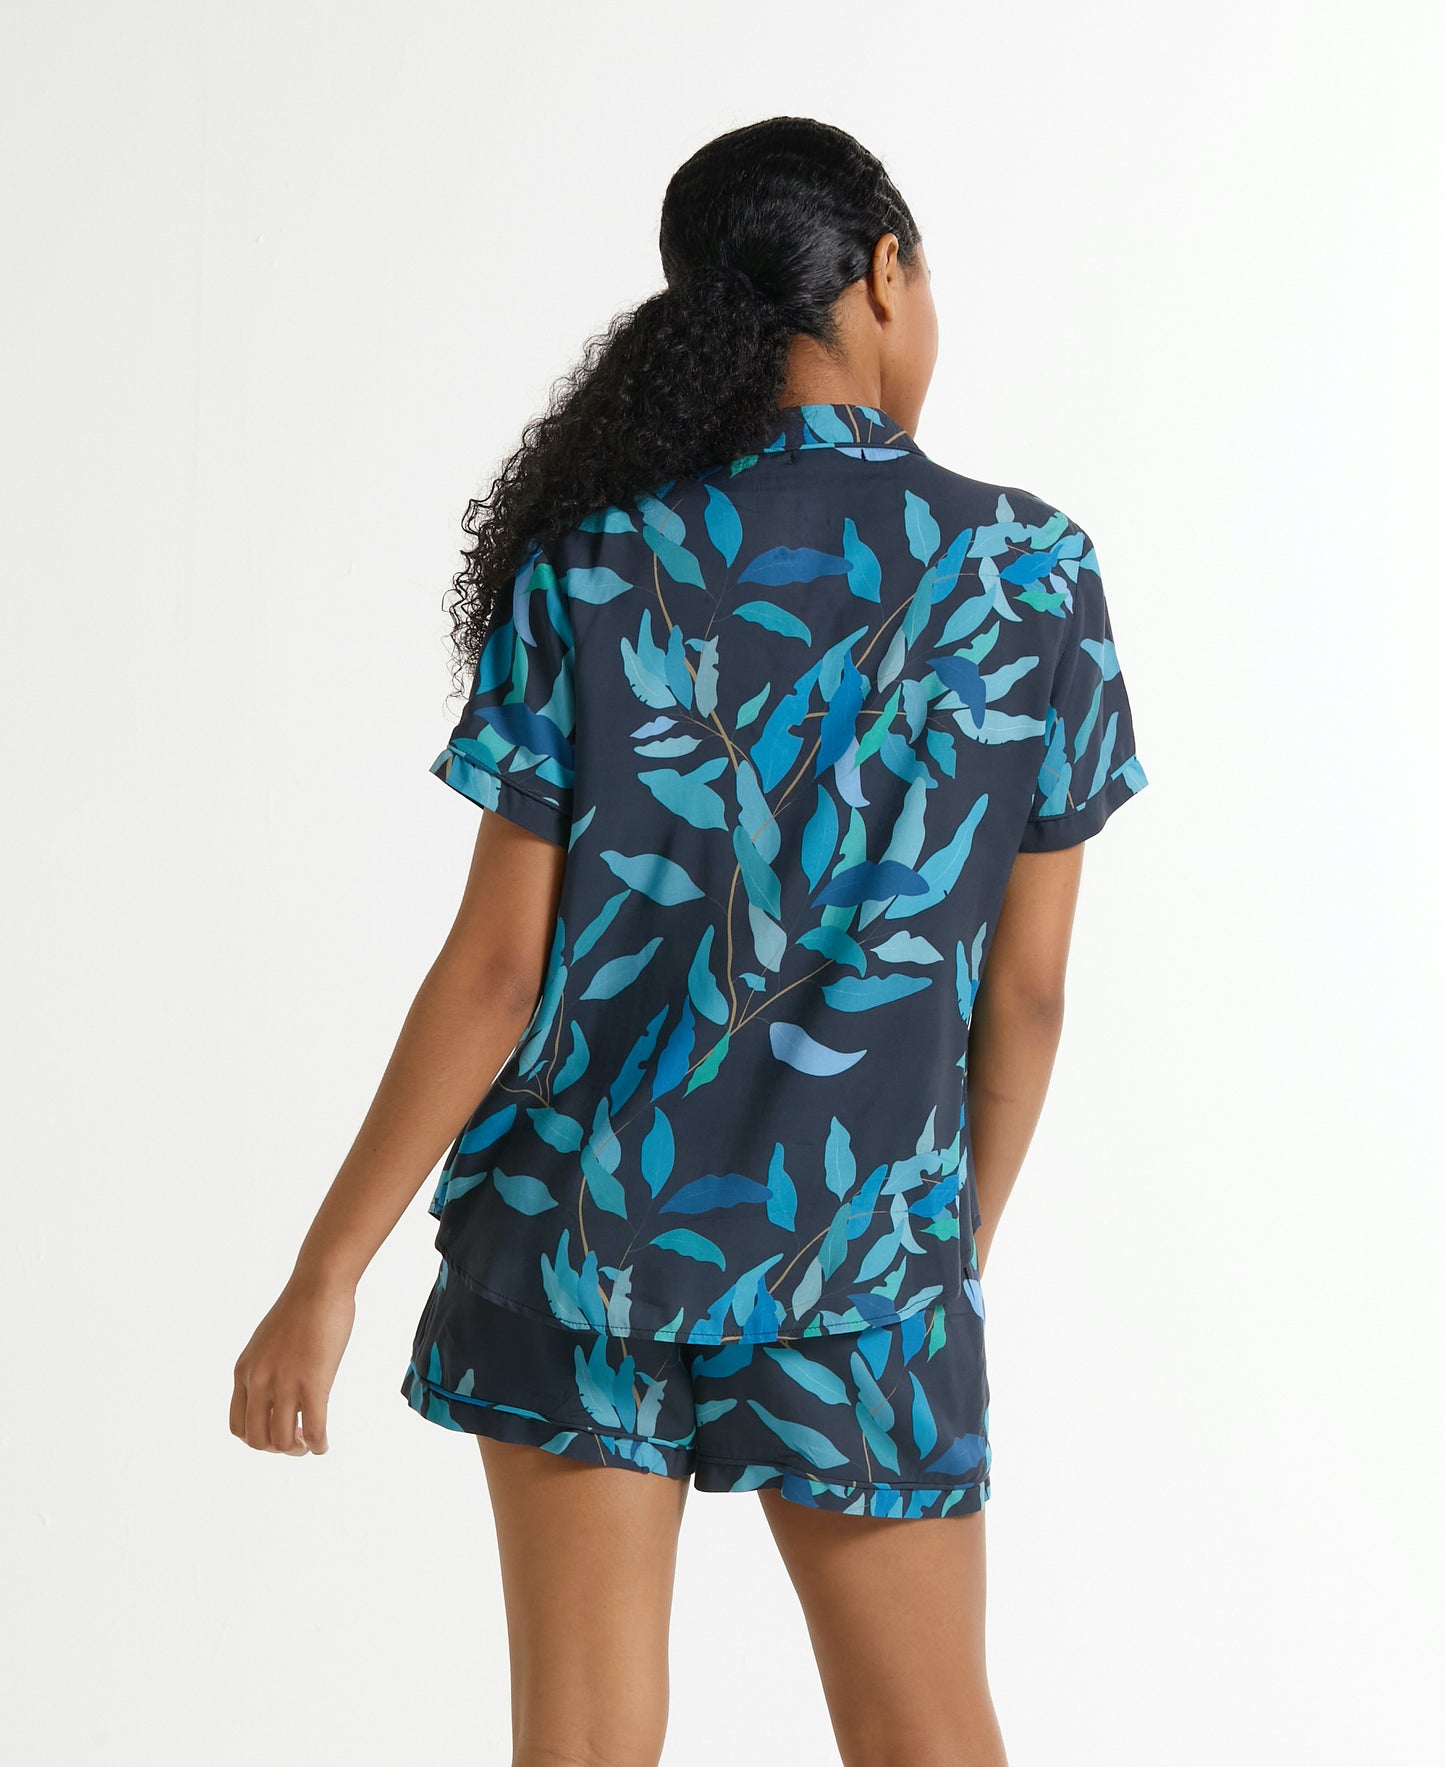 Nikki- Midnight Leaf: Short Sleeve Sleepwear Set button-up with elasticated shorts.